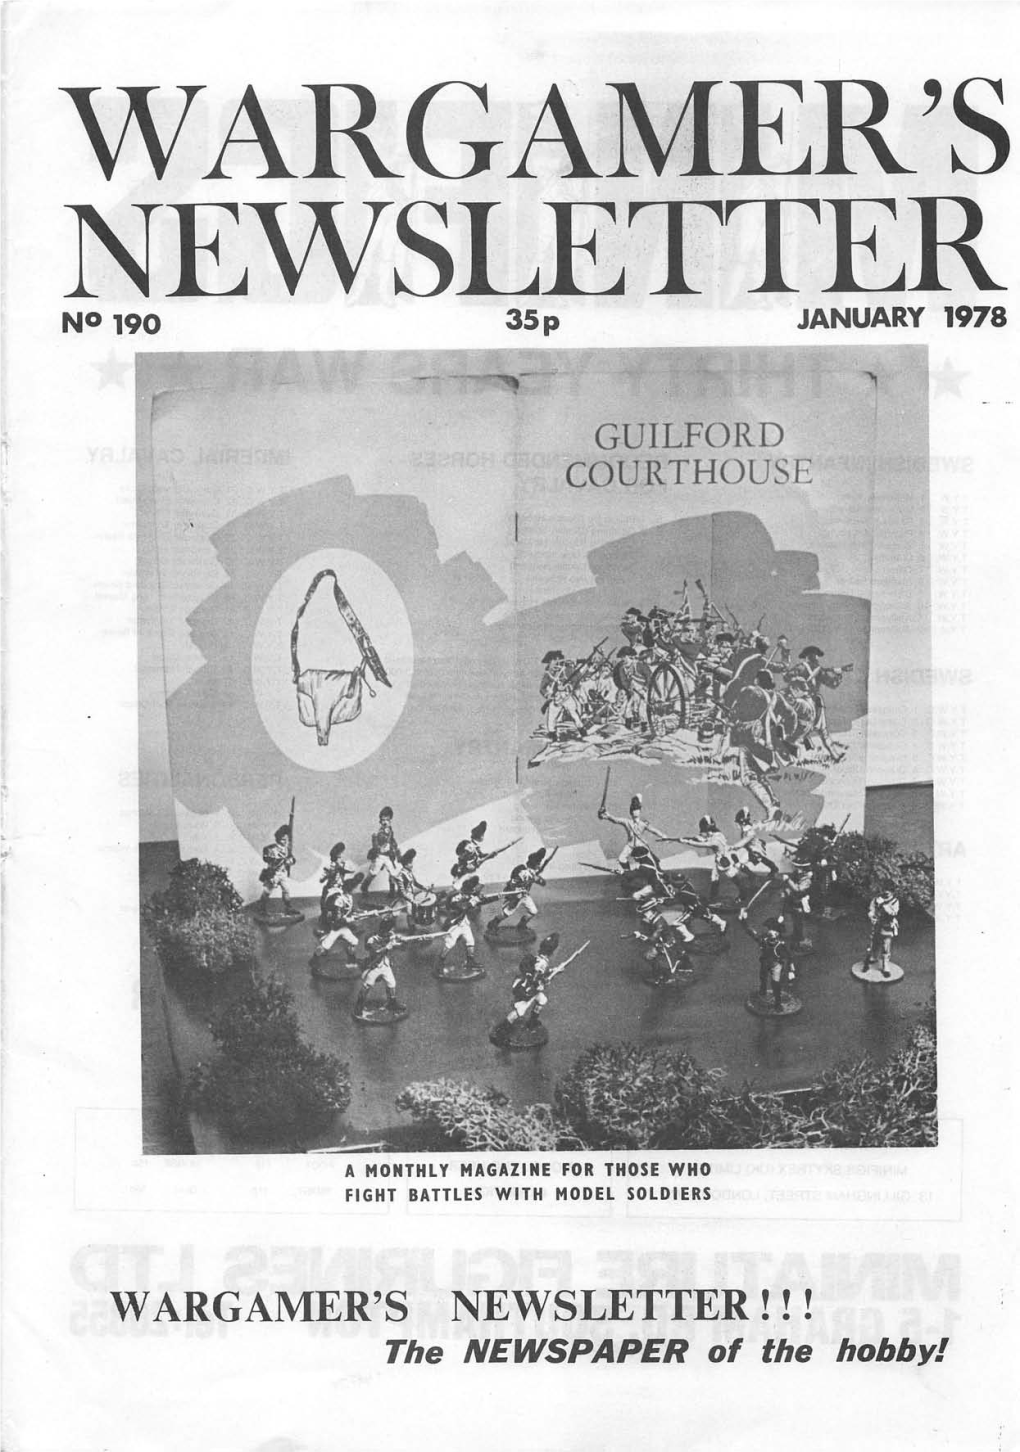 WARGAMER's NEWSLETTER NO 190 35 P JANUARY 1978